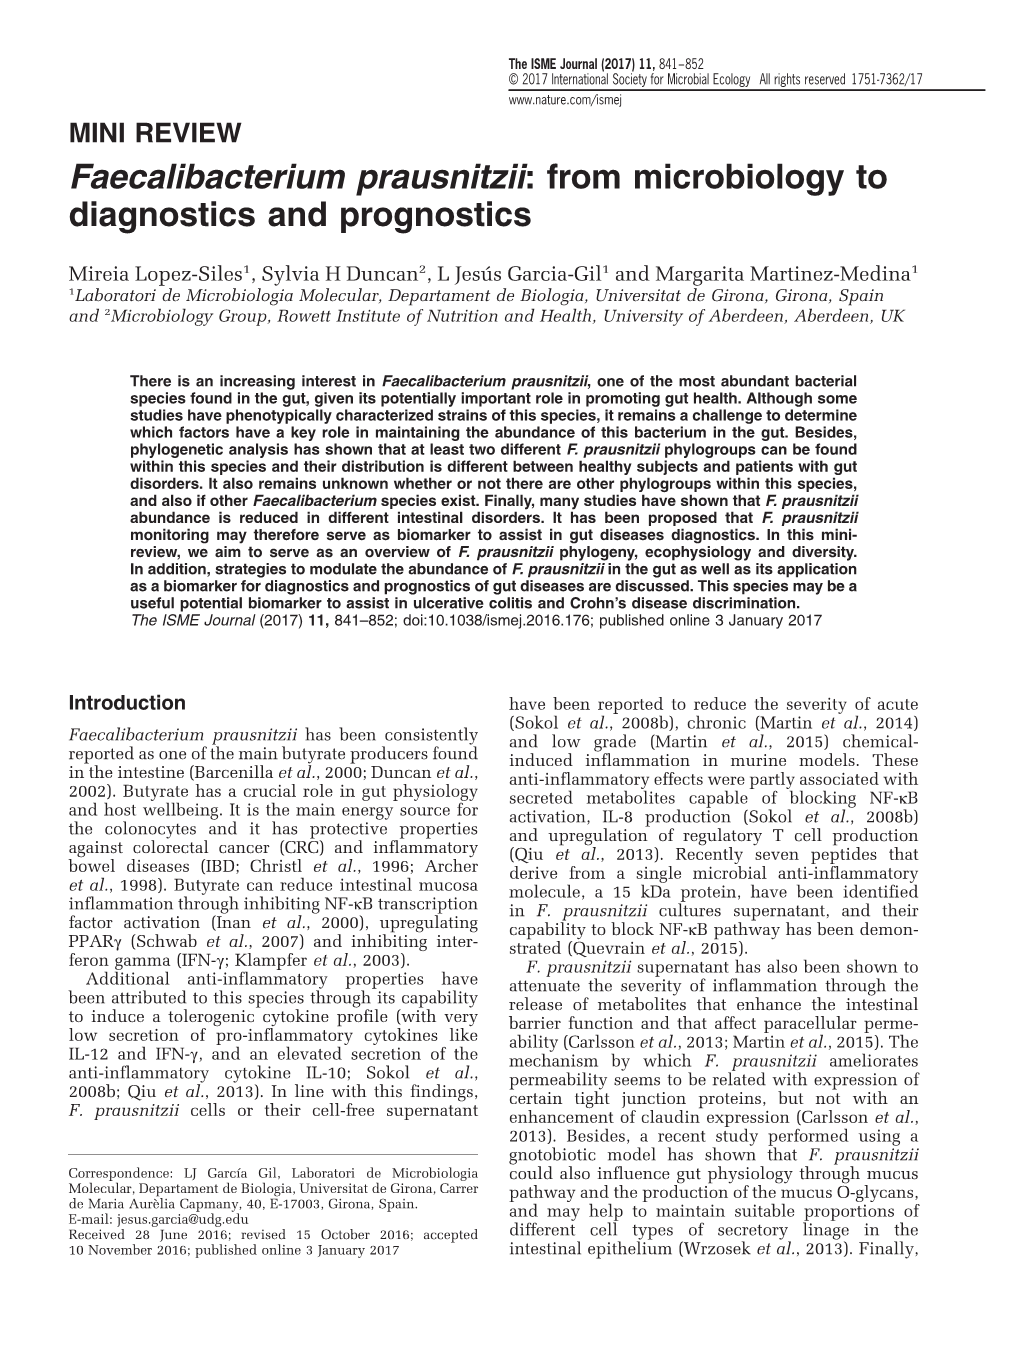 Faecalibacterium Prausnitzii: from Microbiology to Diagnostics and Prognostics